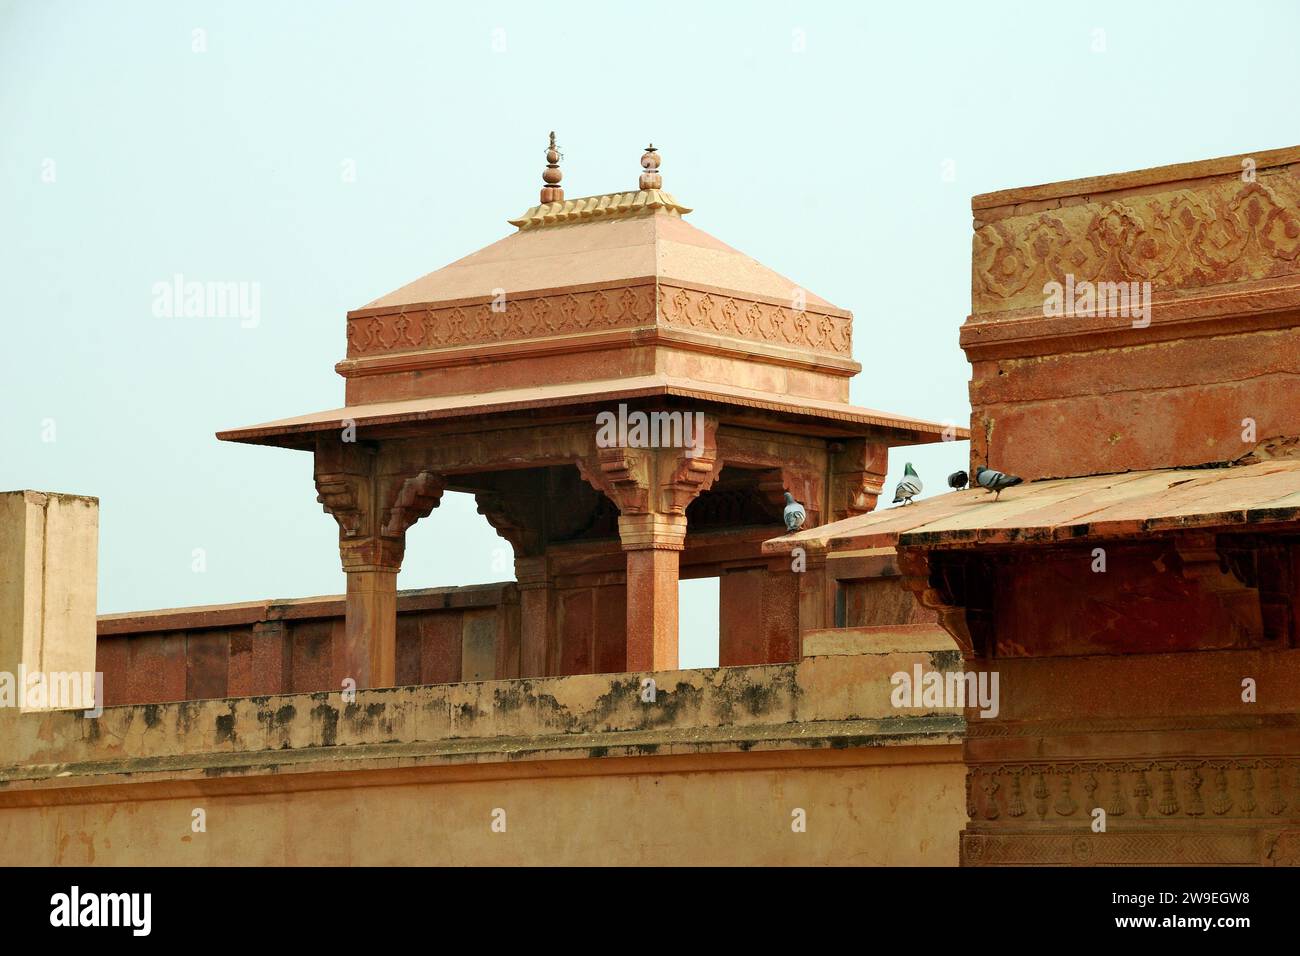 Jodhabai Palace & surroundings, a UNESCO World Heritage Site located at Fatehpur Sikri, Uttar Pradesh, India Stock Photo